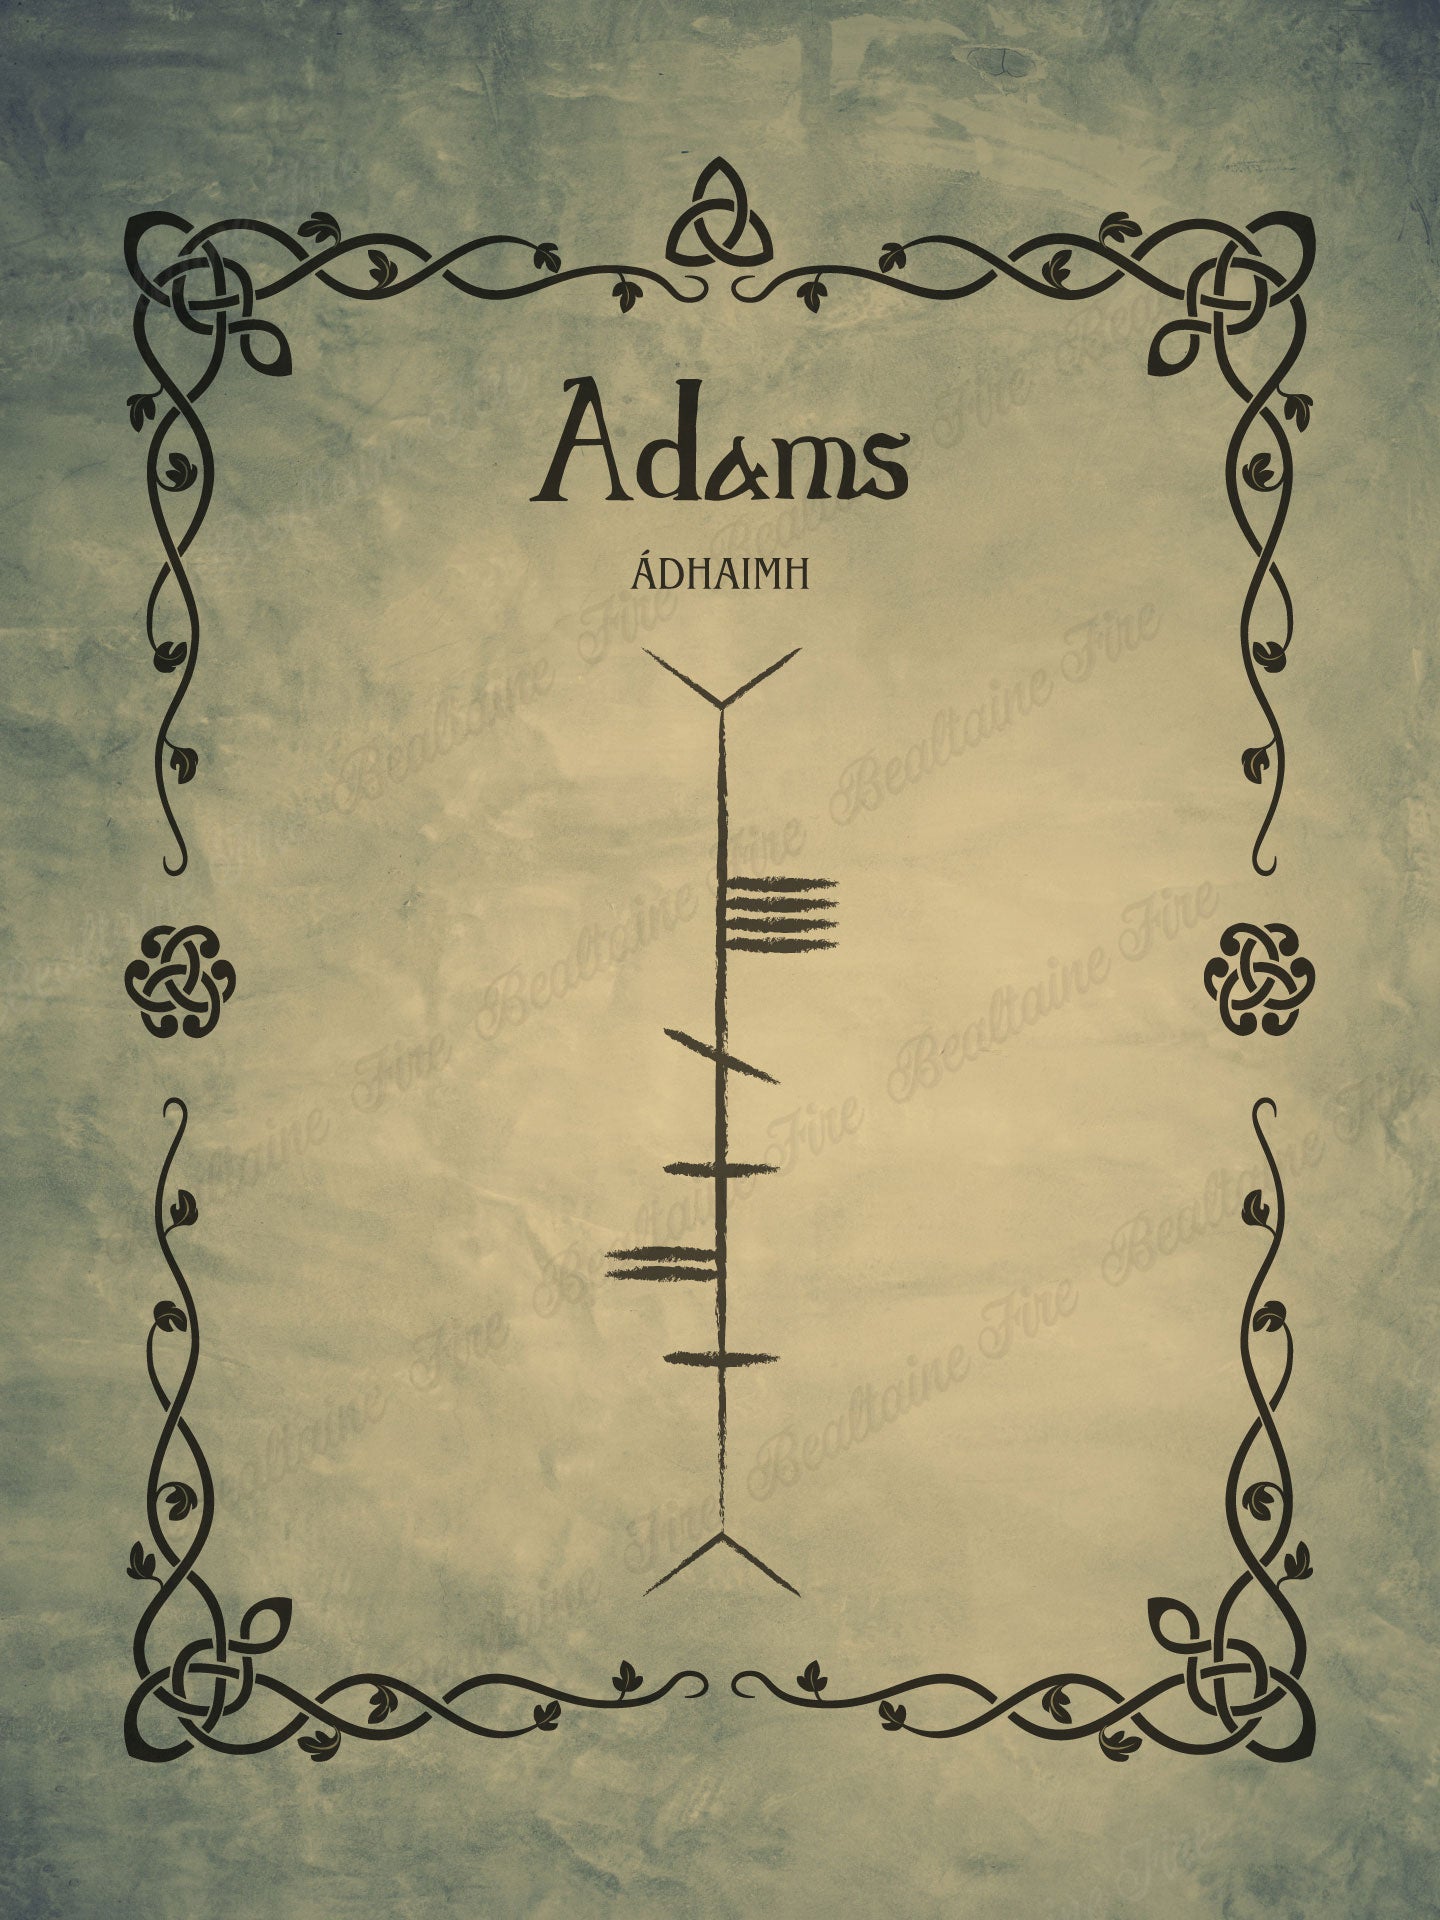 Adams in Ogham premium luster unframed print